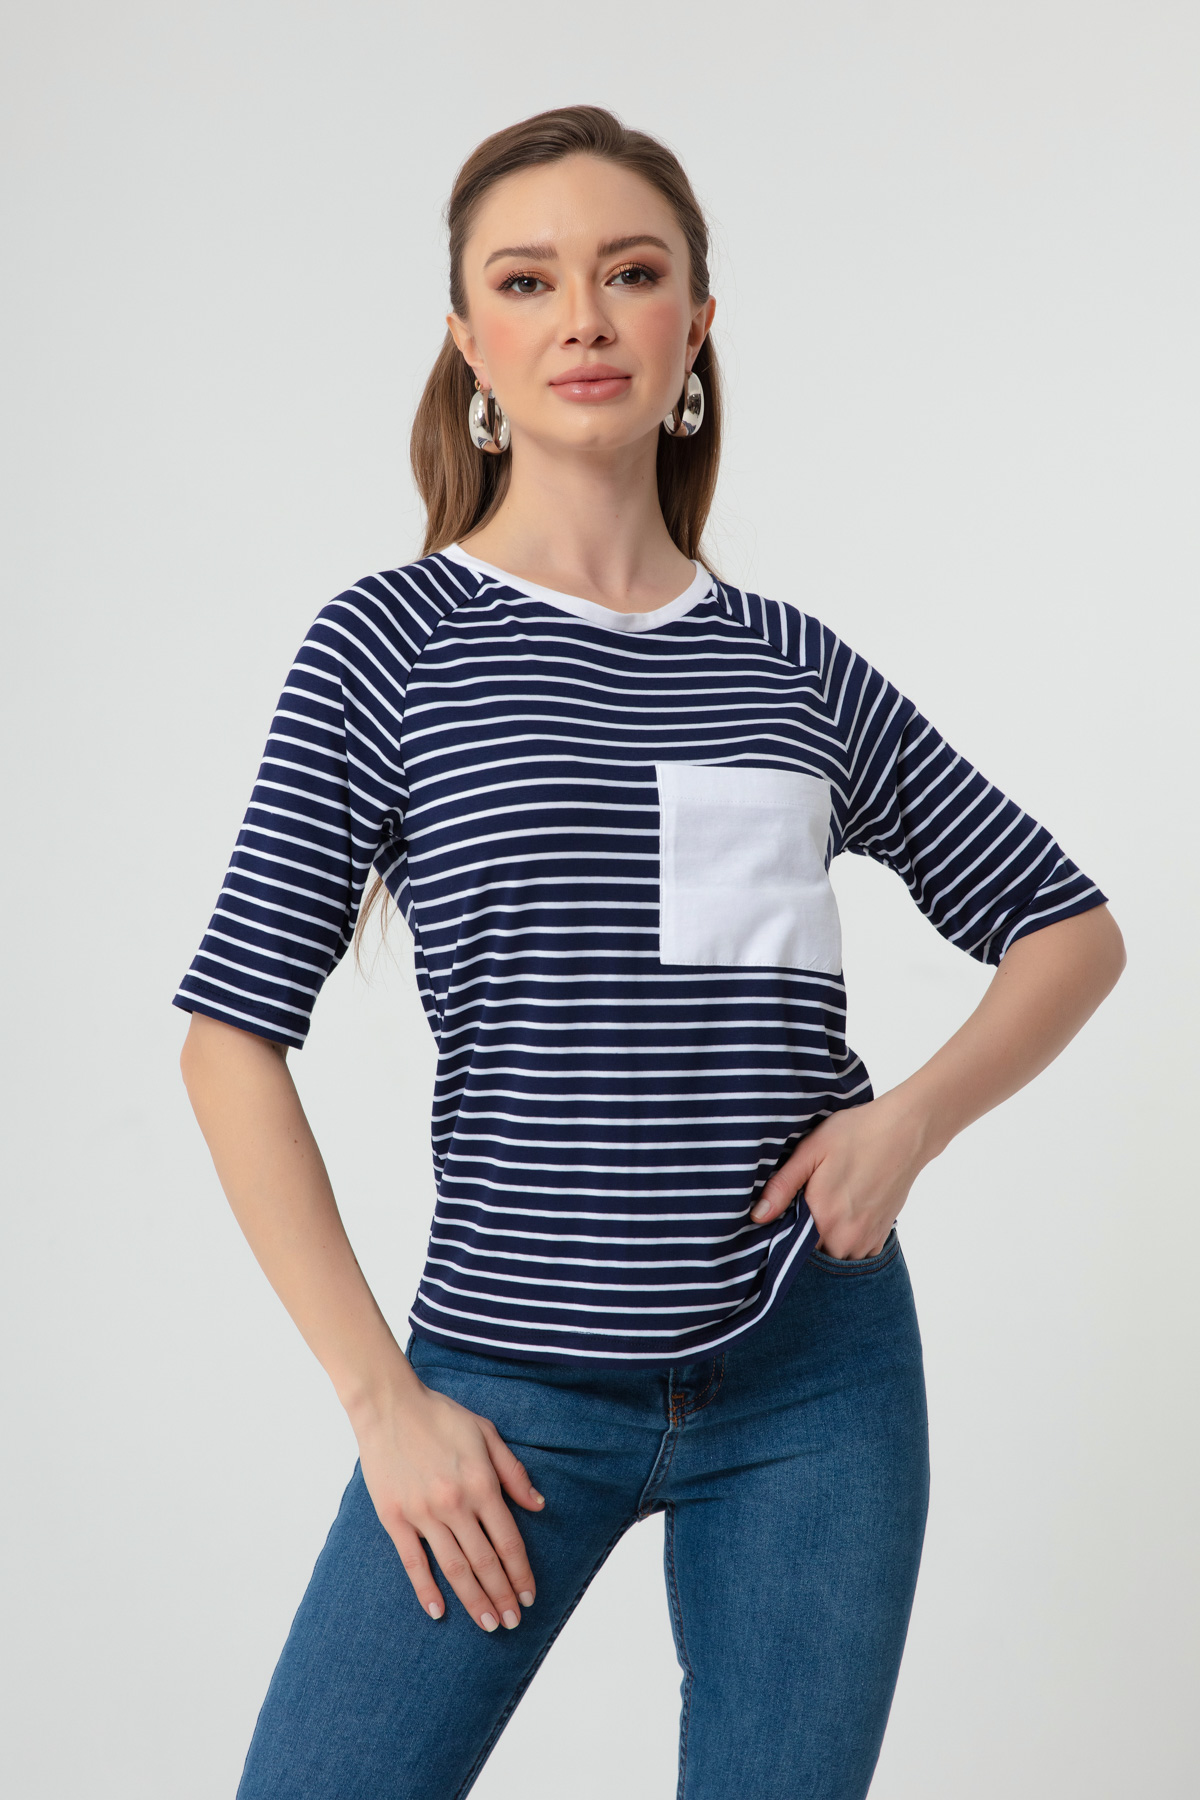 Women's White Striped T-Shirt